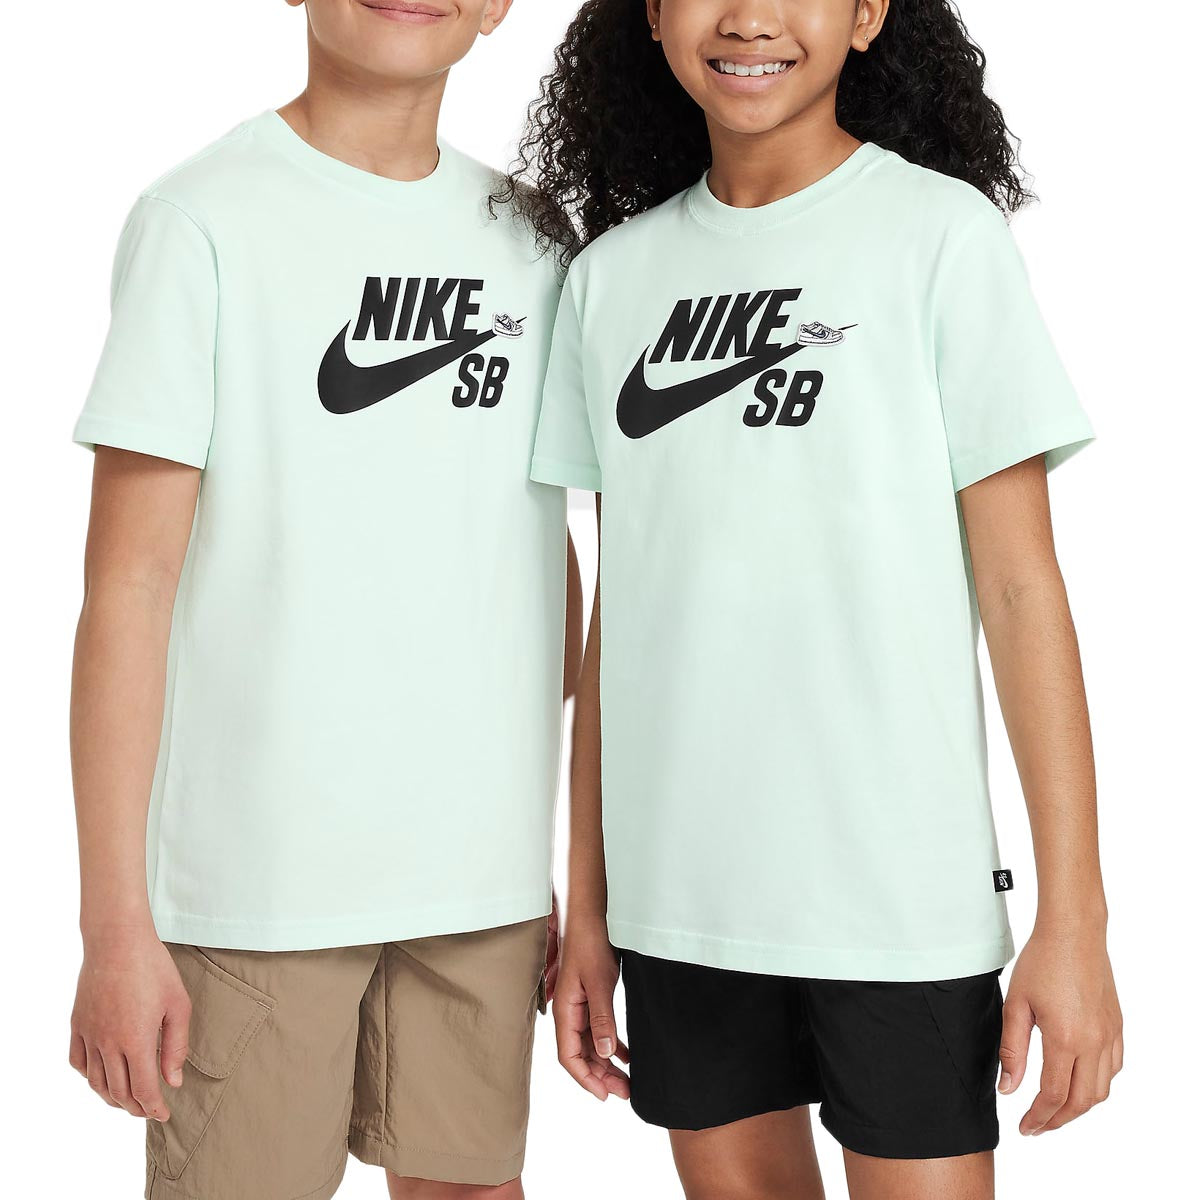 Nike SB Youth Logo T-Shirt - Barely Green image 2